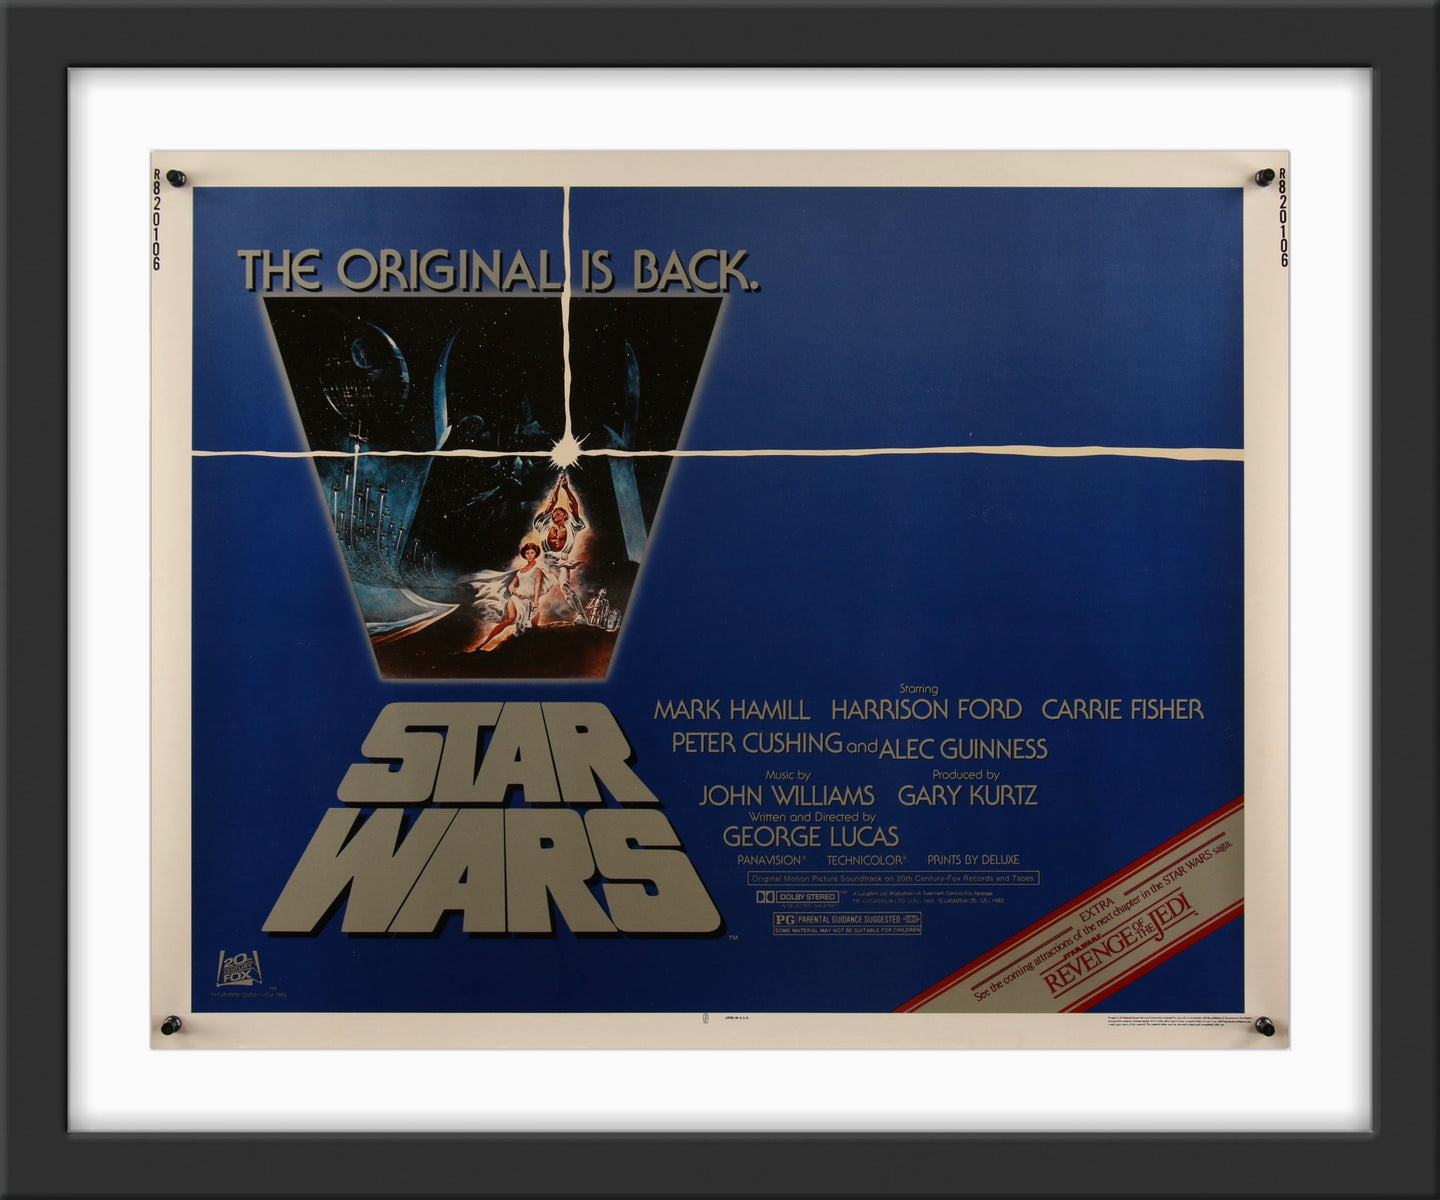 An original half sheet movie poster for the film Star Wars